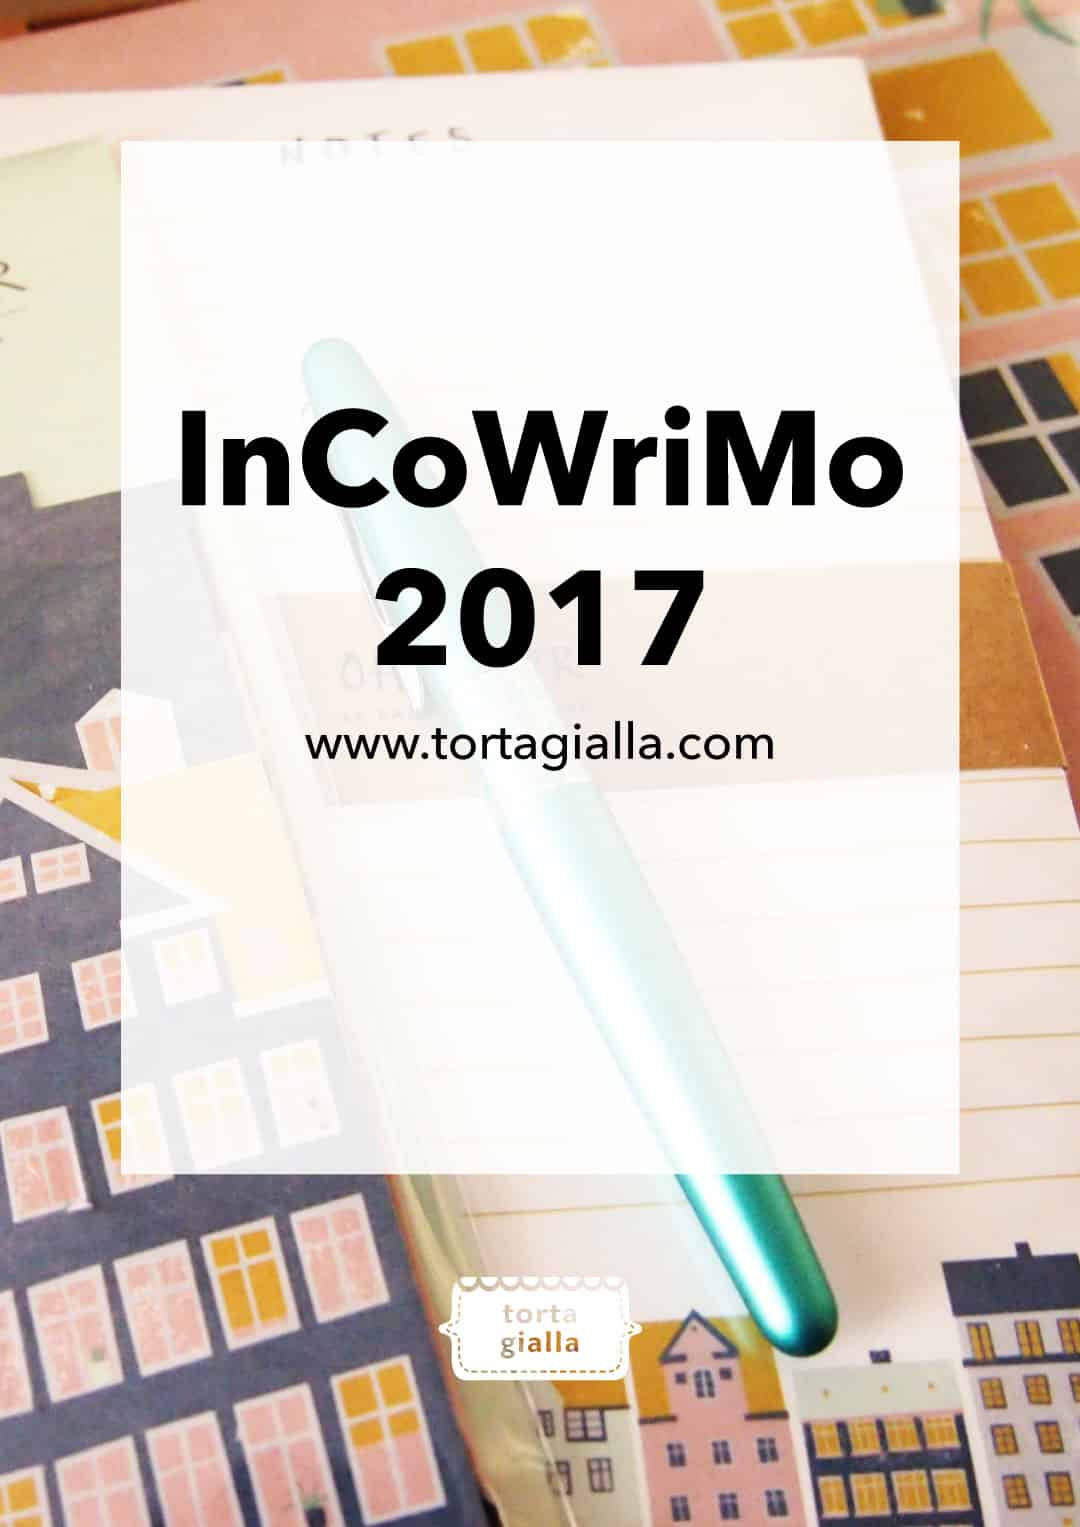 InCoWriMo 2017 - International Correspondence Writing Month 2017